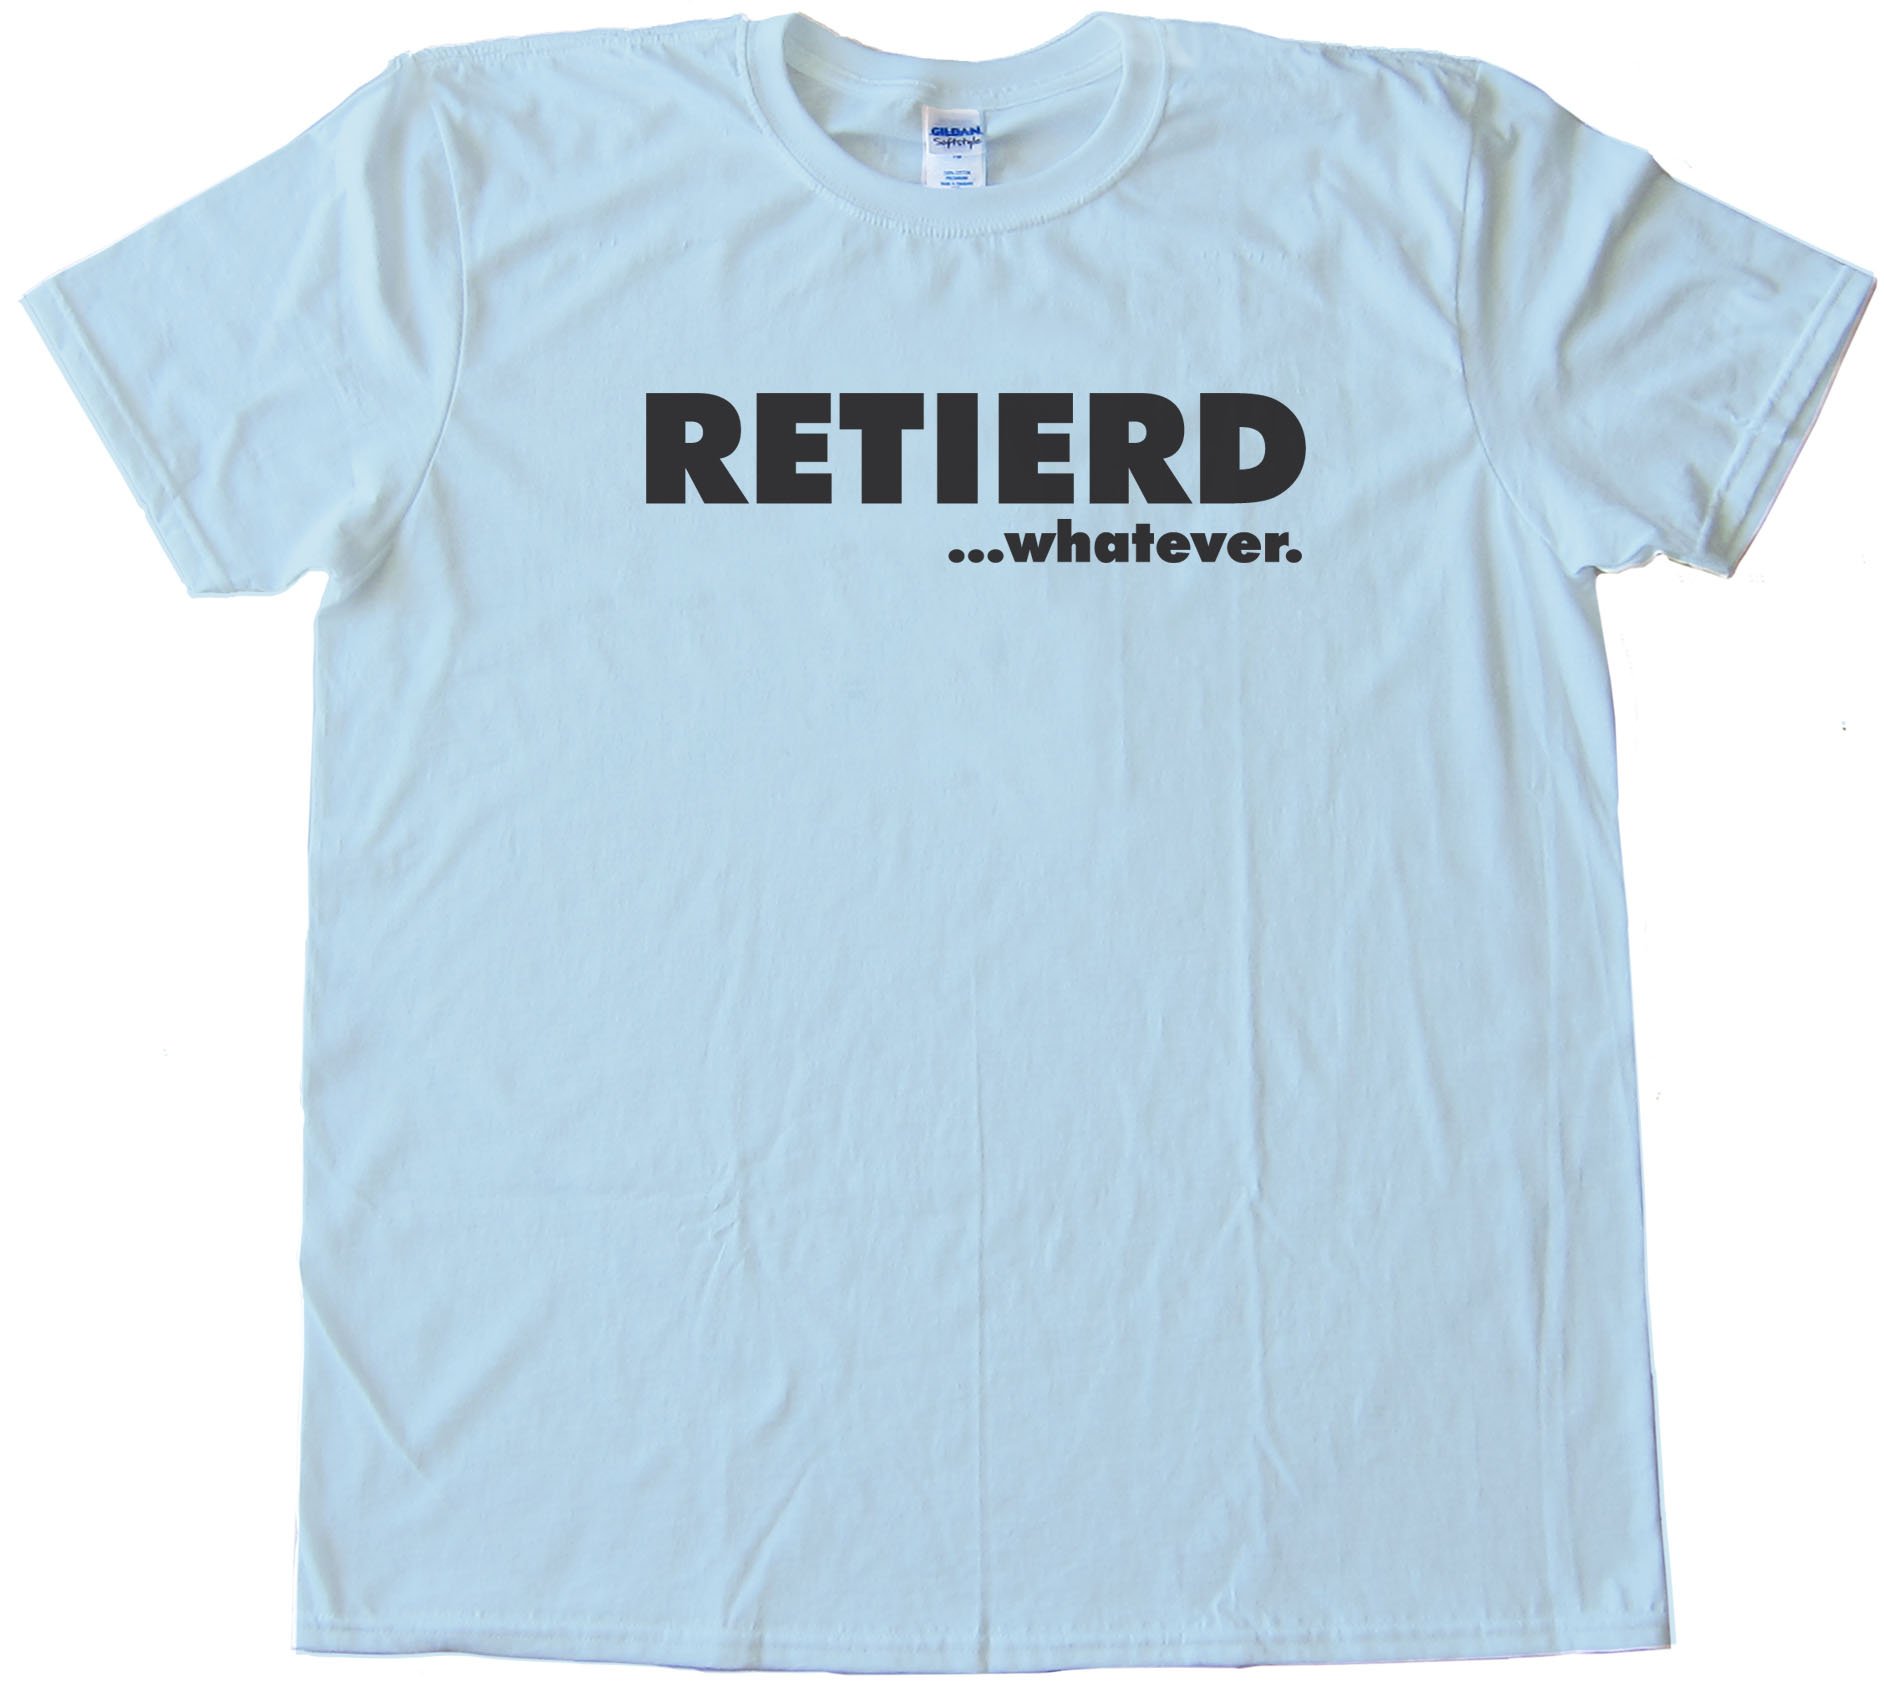 Retired - Retierd...Whatever... Tee Shirt